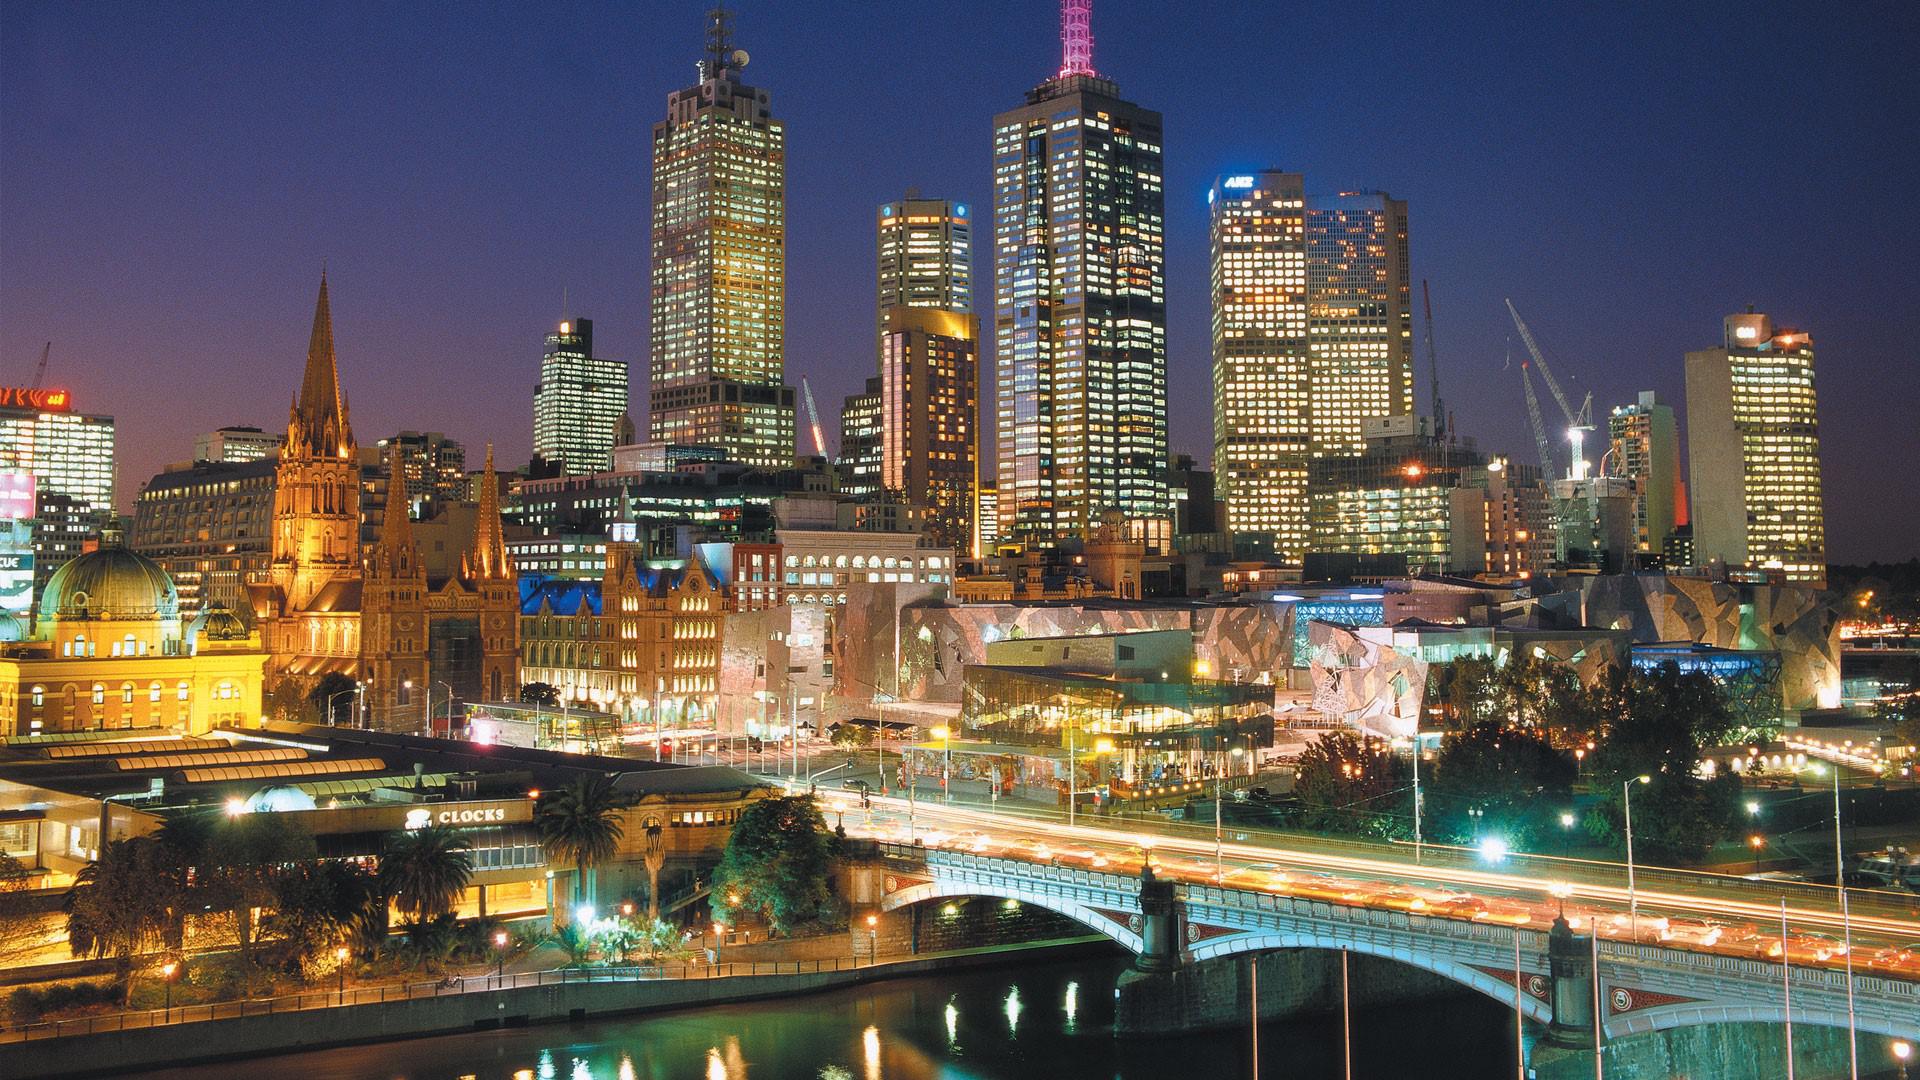 Amazing City View of Melbourne Australia  HD Photos 